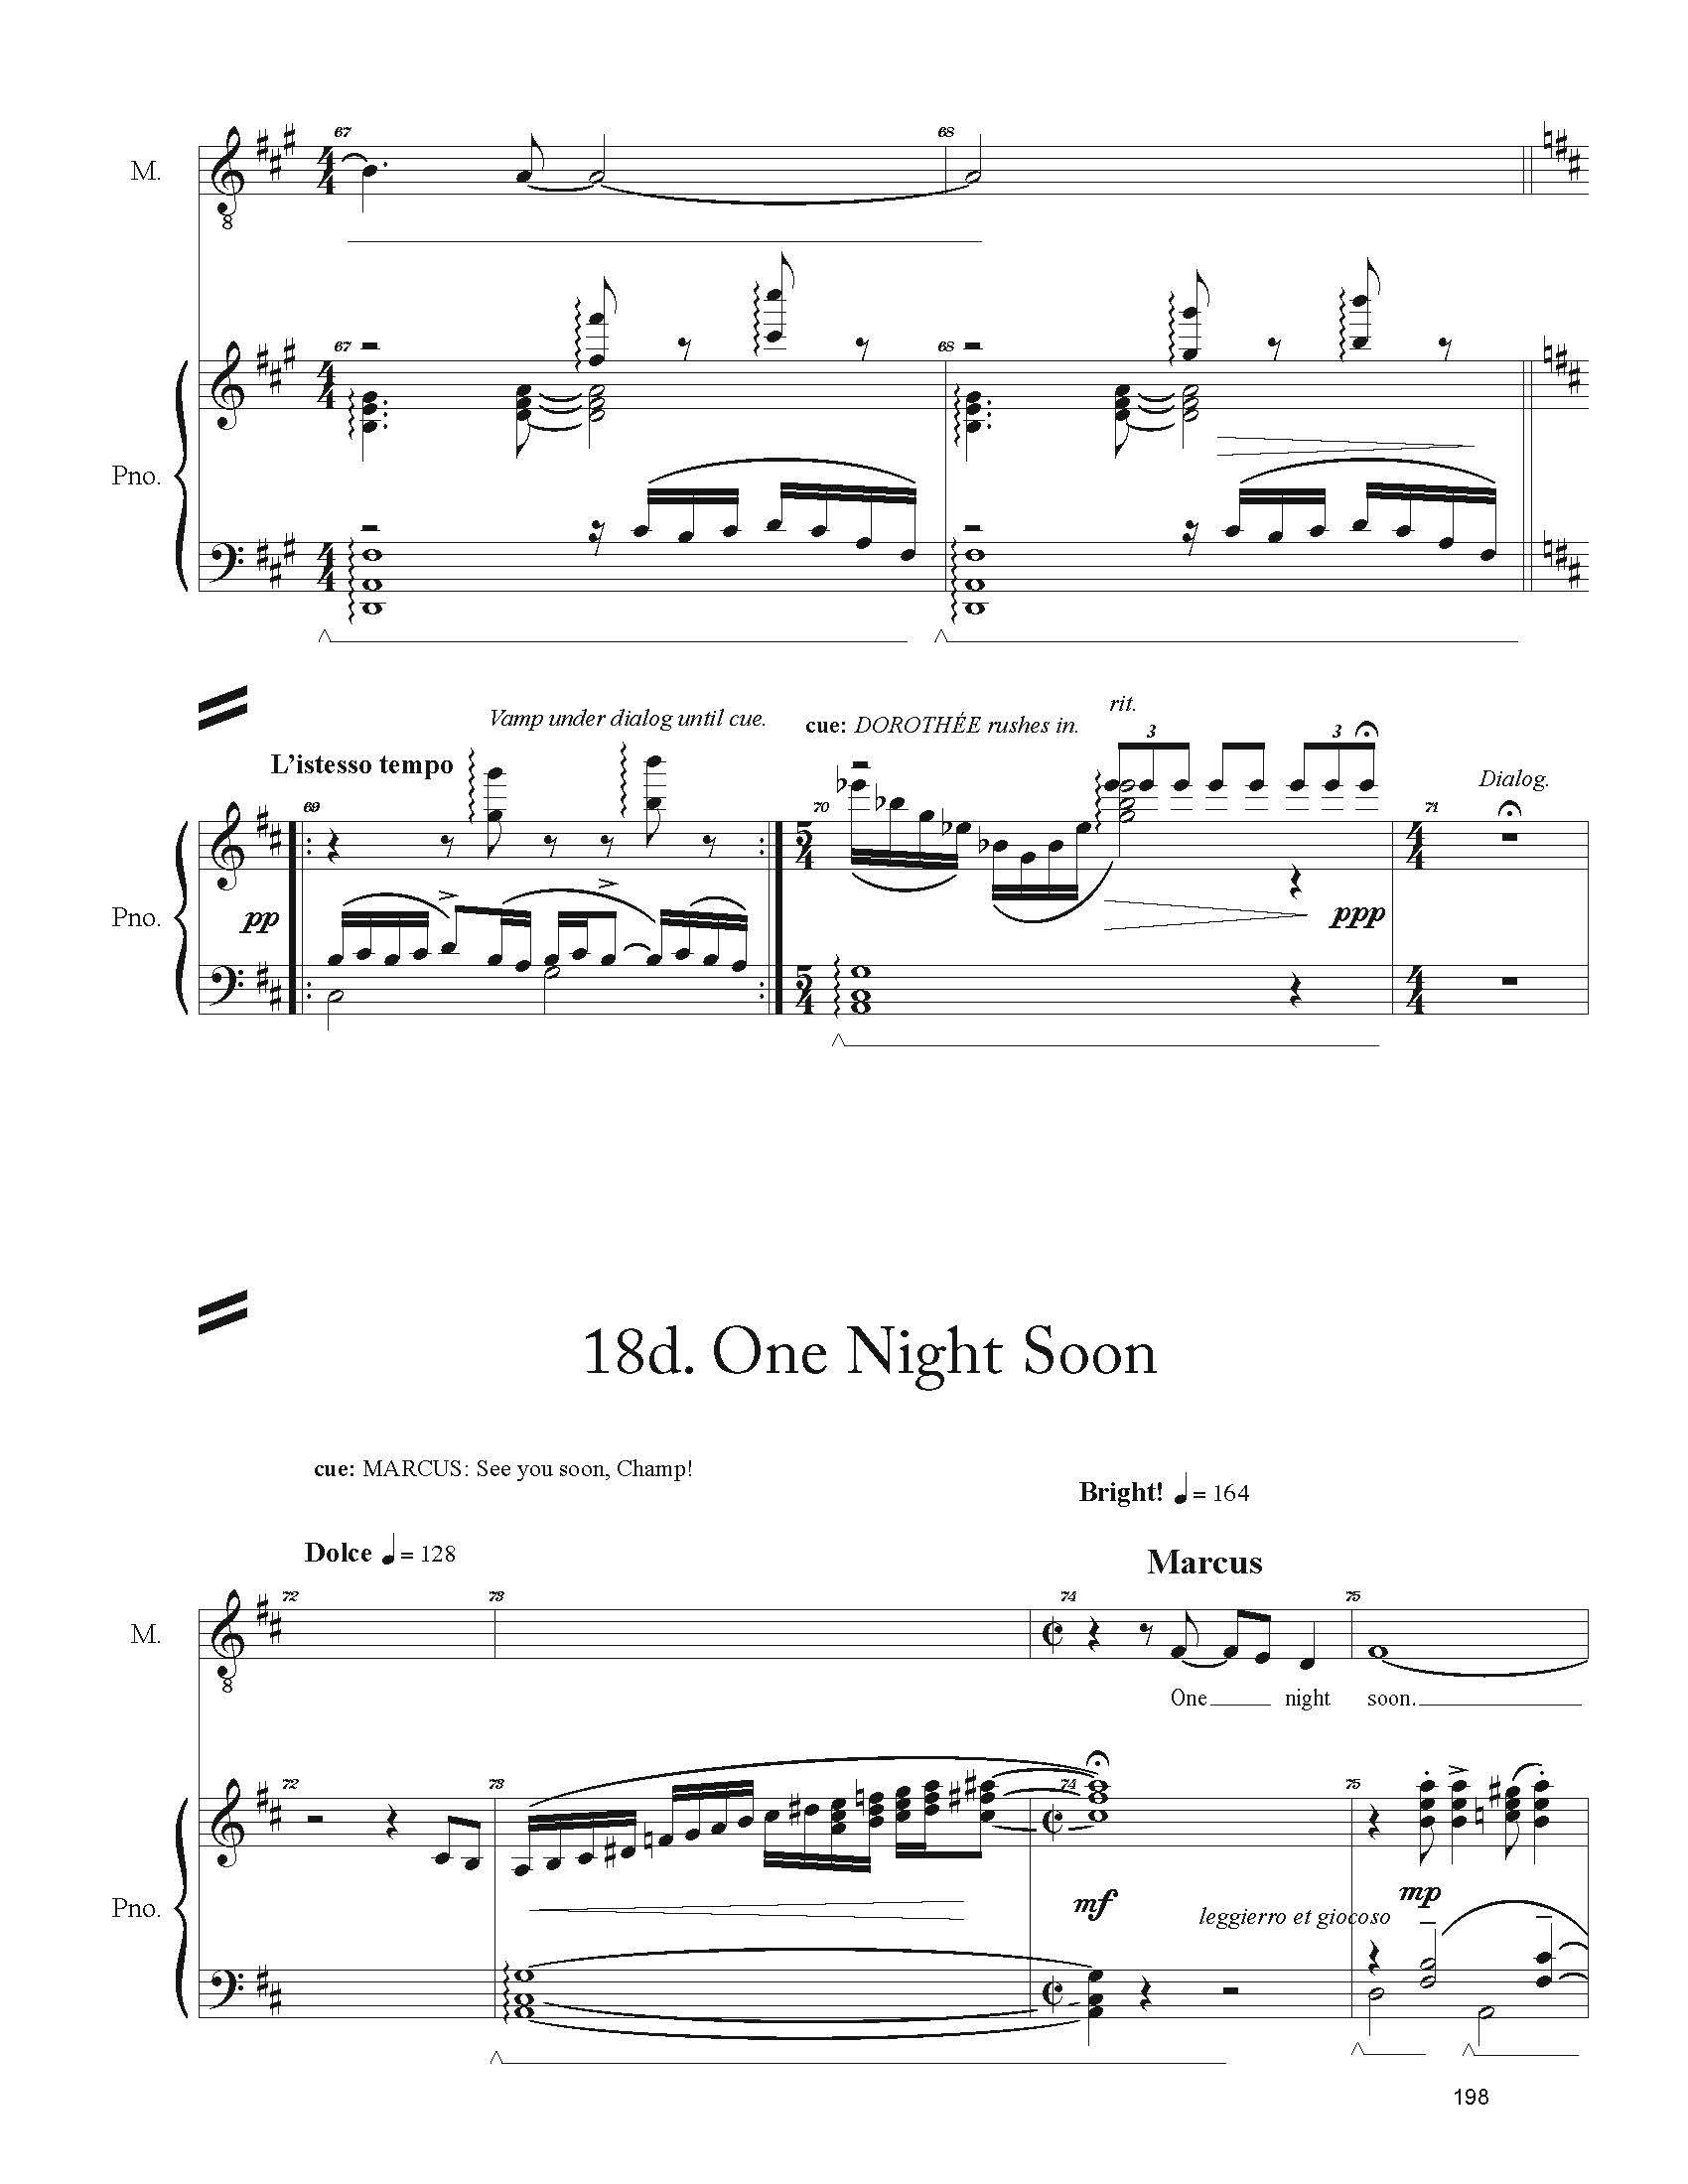 FULL PIANO VOCAL SCORE DRAFT 1 - Score_Page_198.jpg